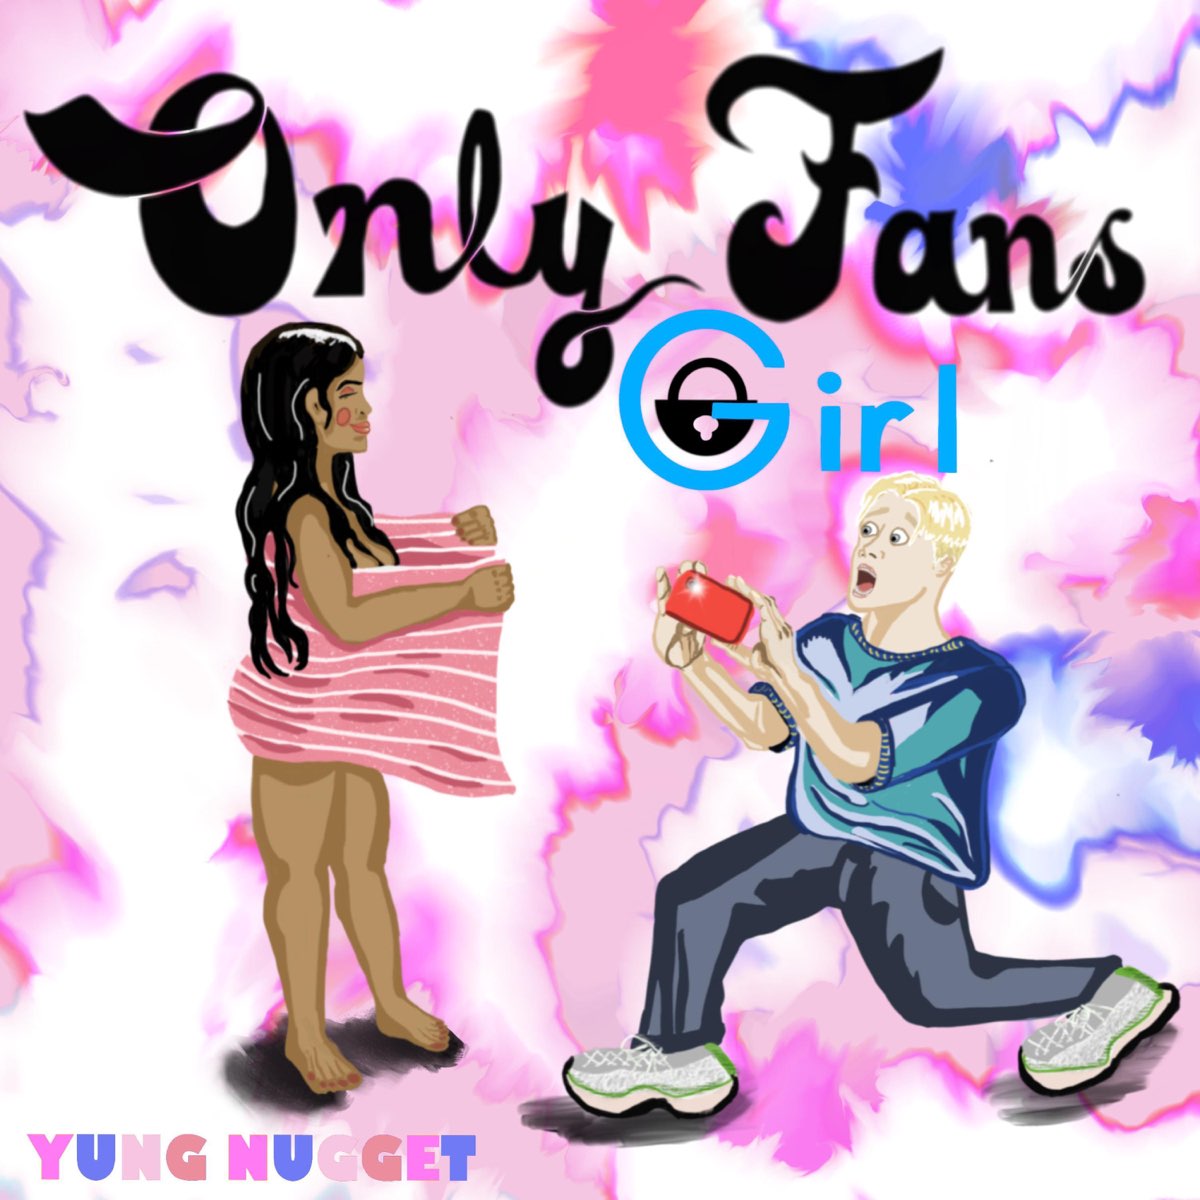 слушать, Onlyfans Girl - Single, Yung Nugget, музыка, синглы, песни, Хип-хо...